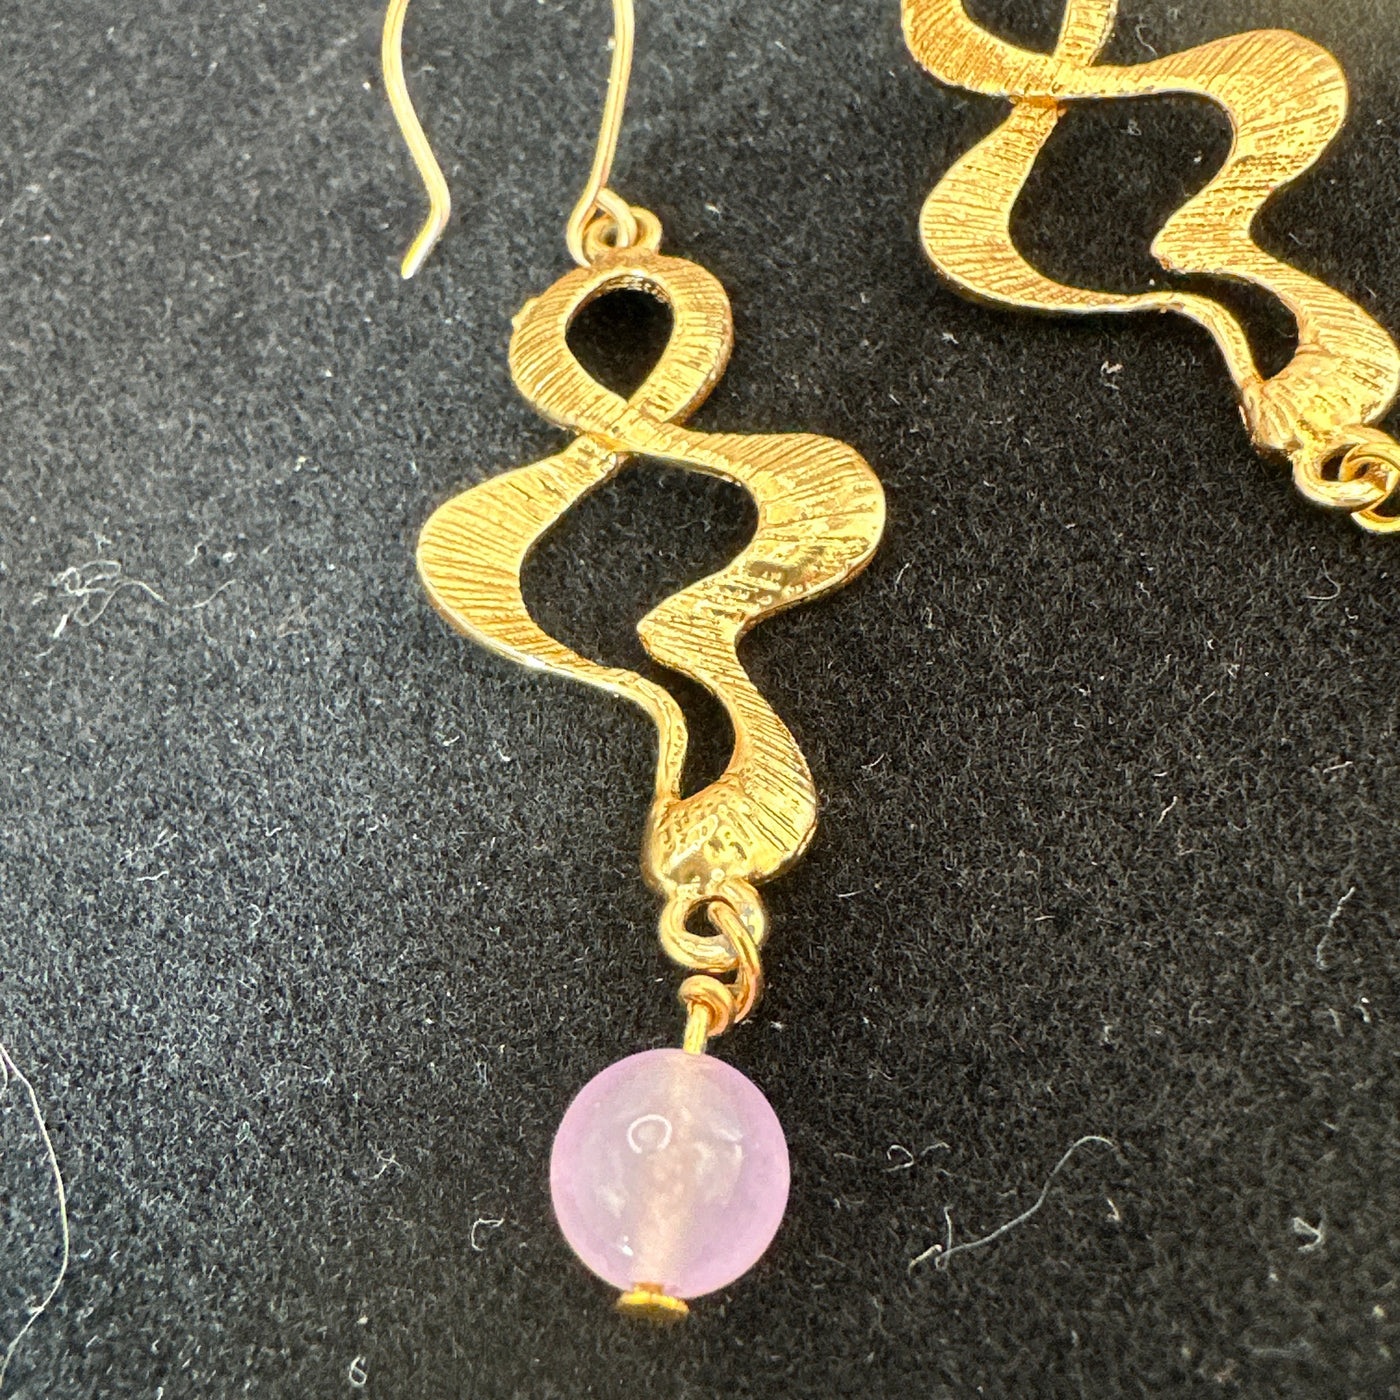 Zama spiraled earrings with lilac Jada pearls